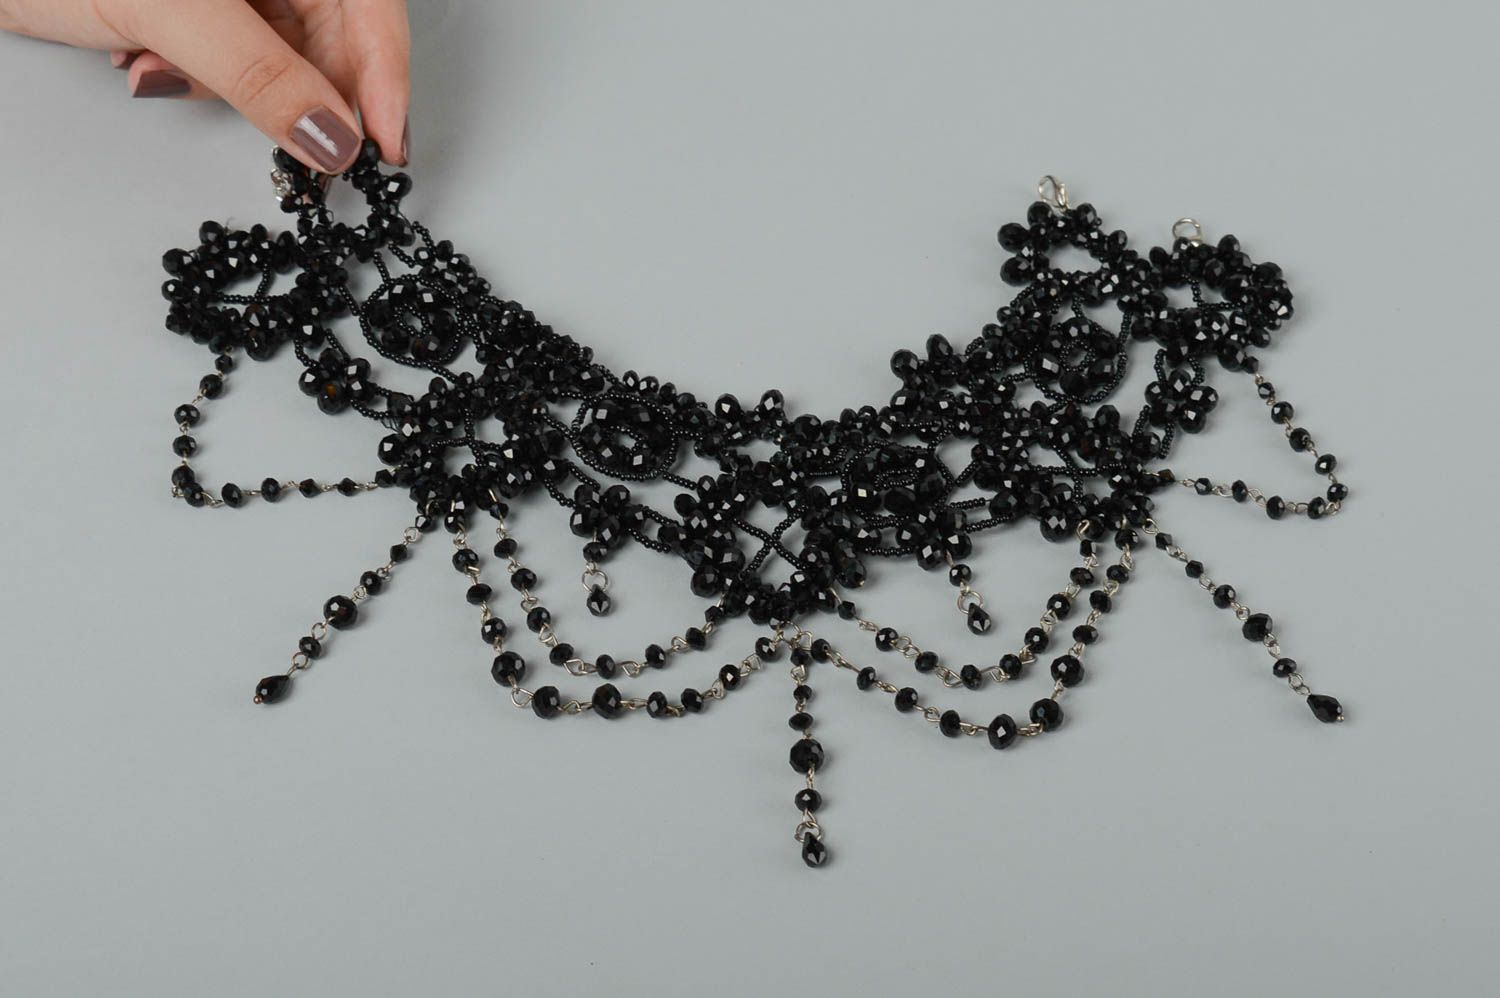 Unusual handmade beaded necklace fashion accessories artisan jewelry designs photo 5